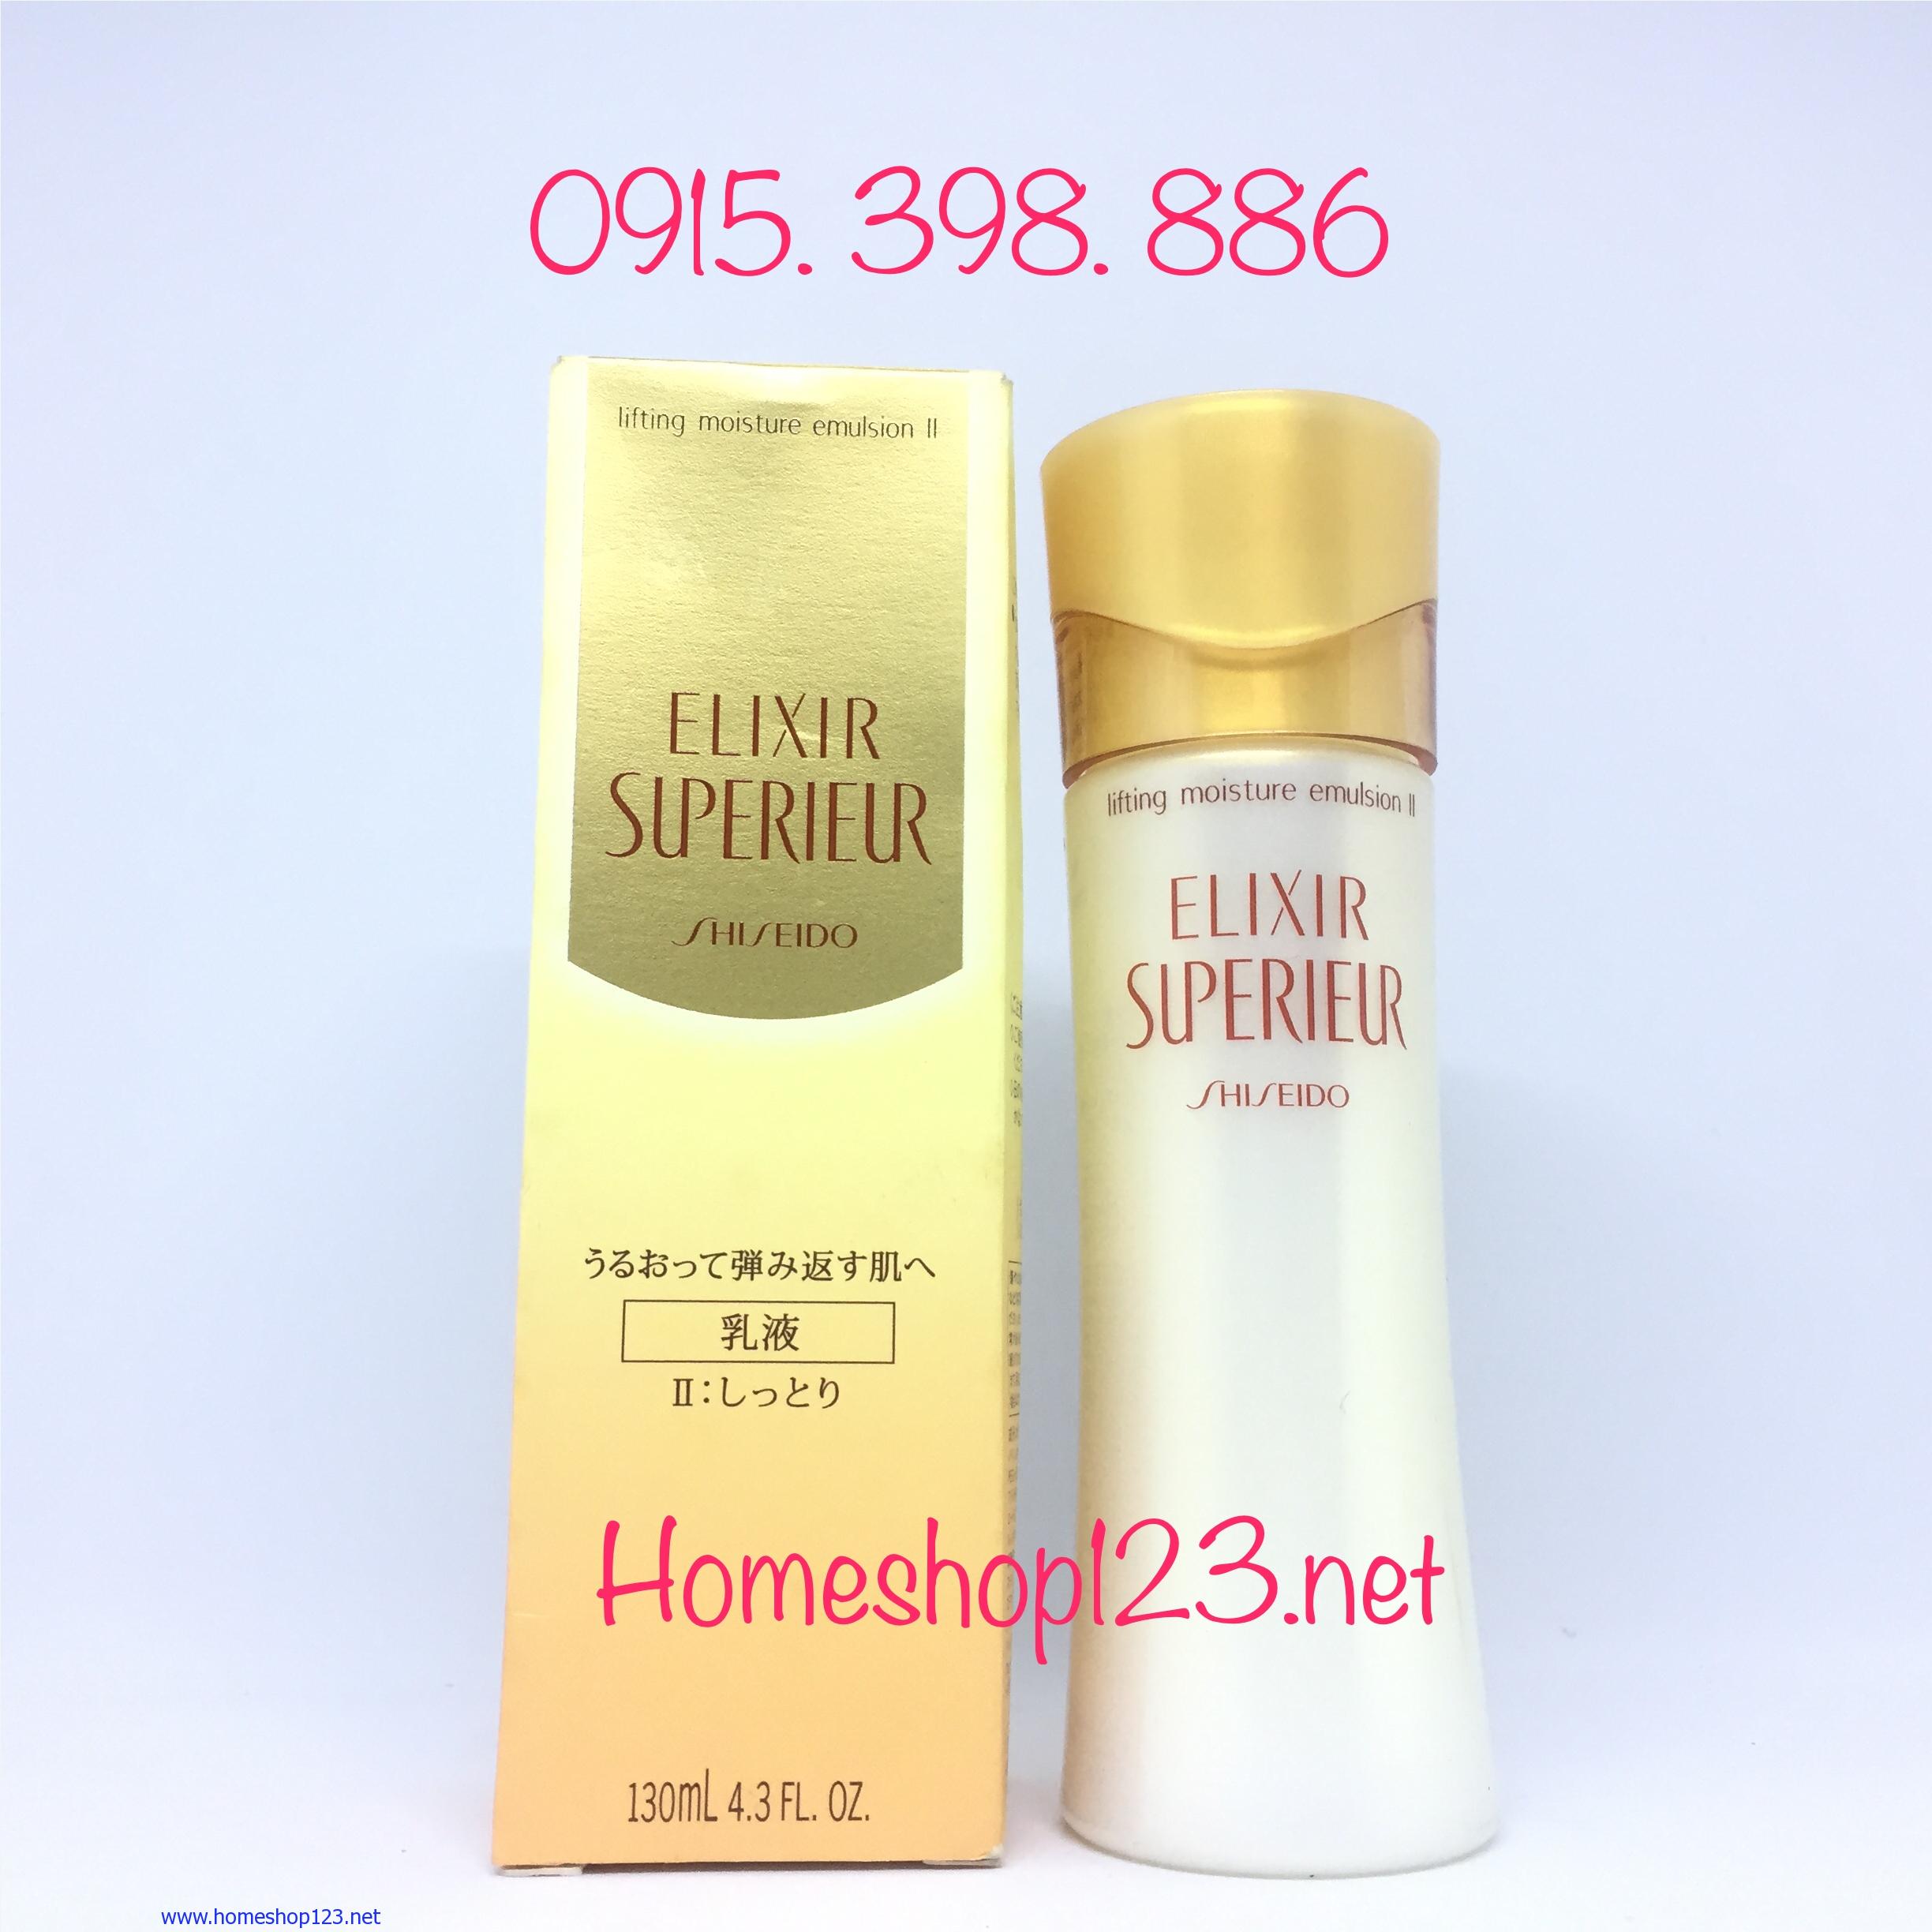 Sữa dưỡng Shiseido Elixir Superieur Lifting Moisture Emulsion II